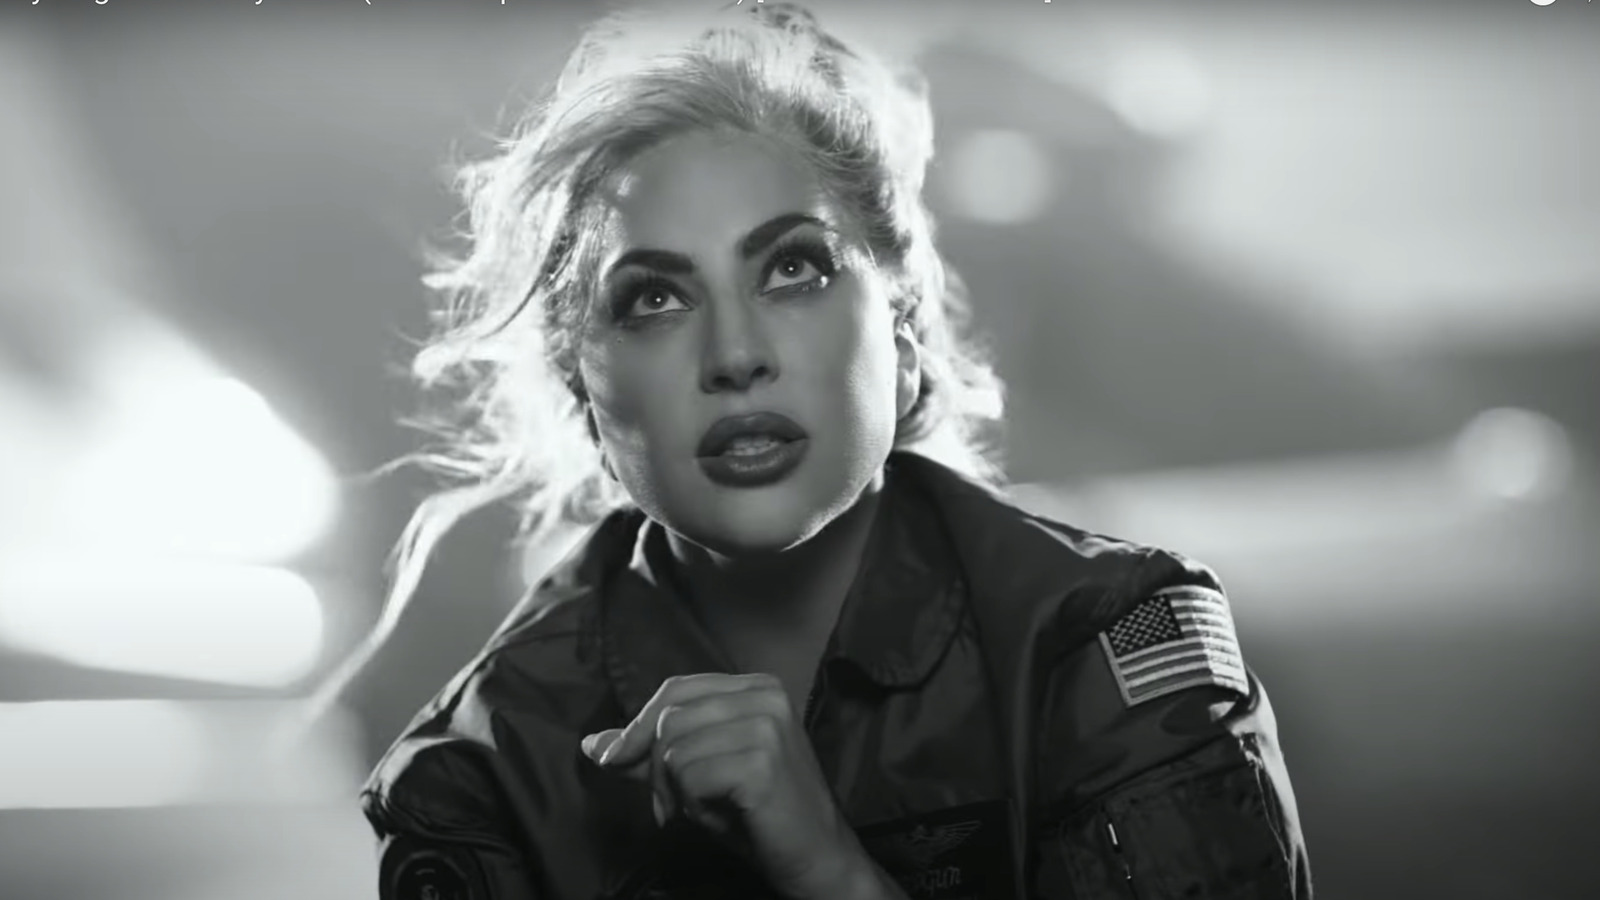 Top Gun Maverick soundtrack: Songs from Lady Gaga and Kenny Loggins